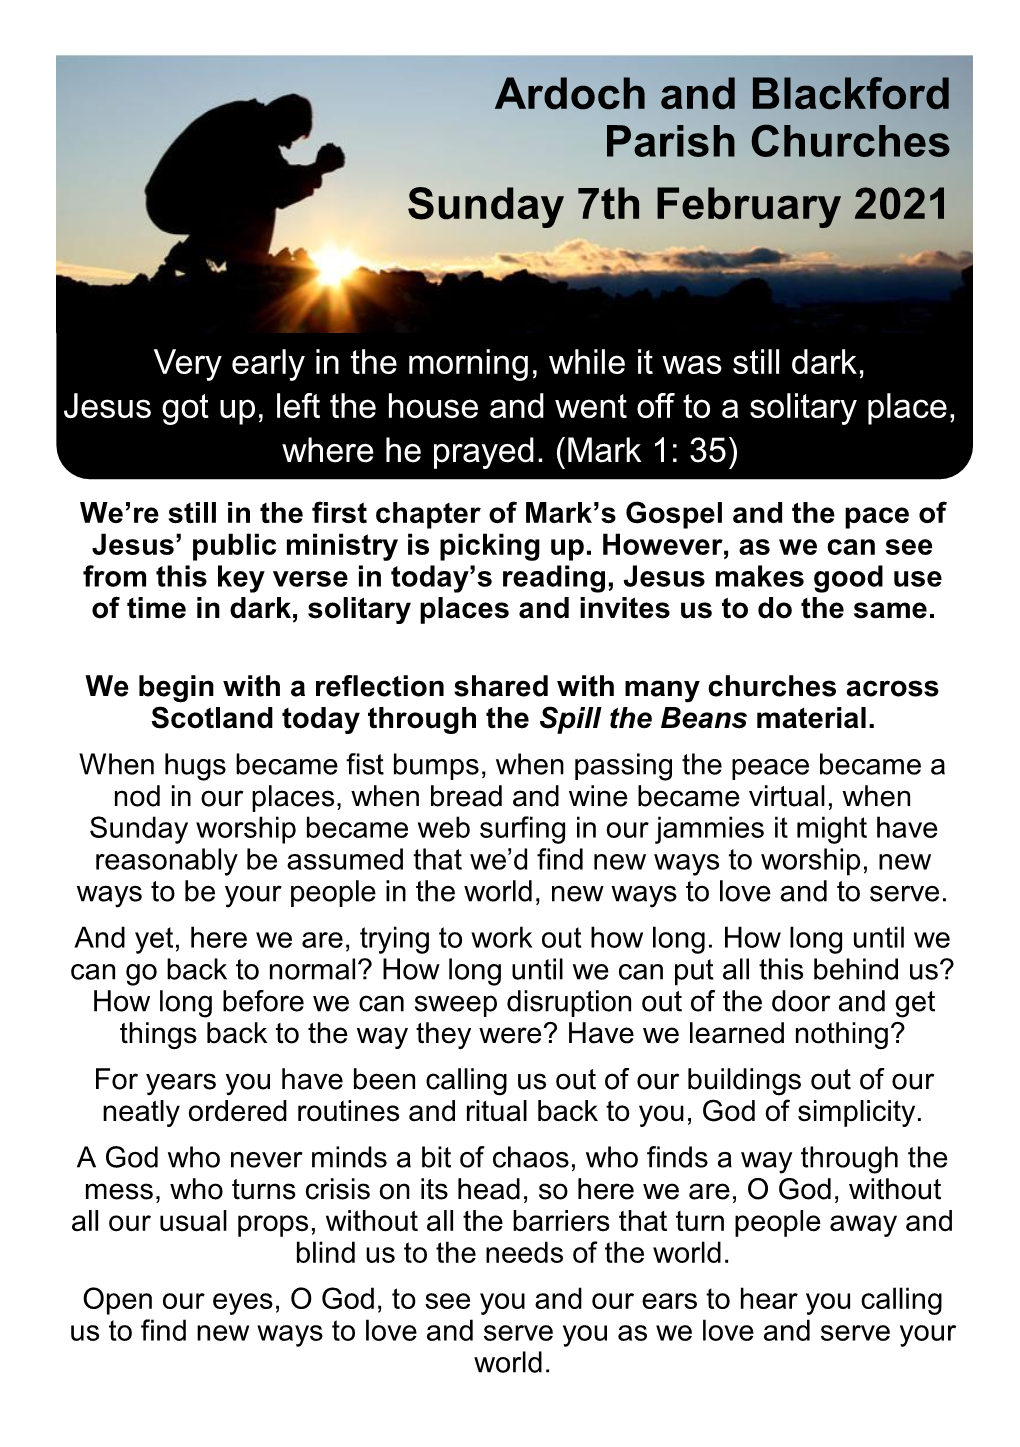 Ardoch and Blackford Parish Churches Sunday 7Th February 2021